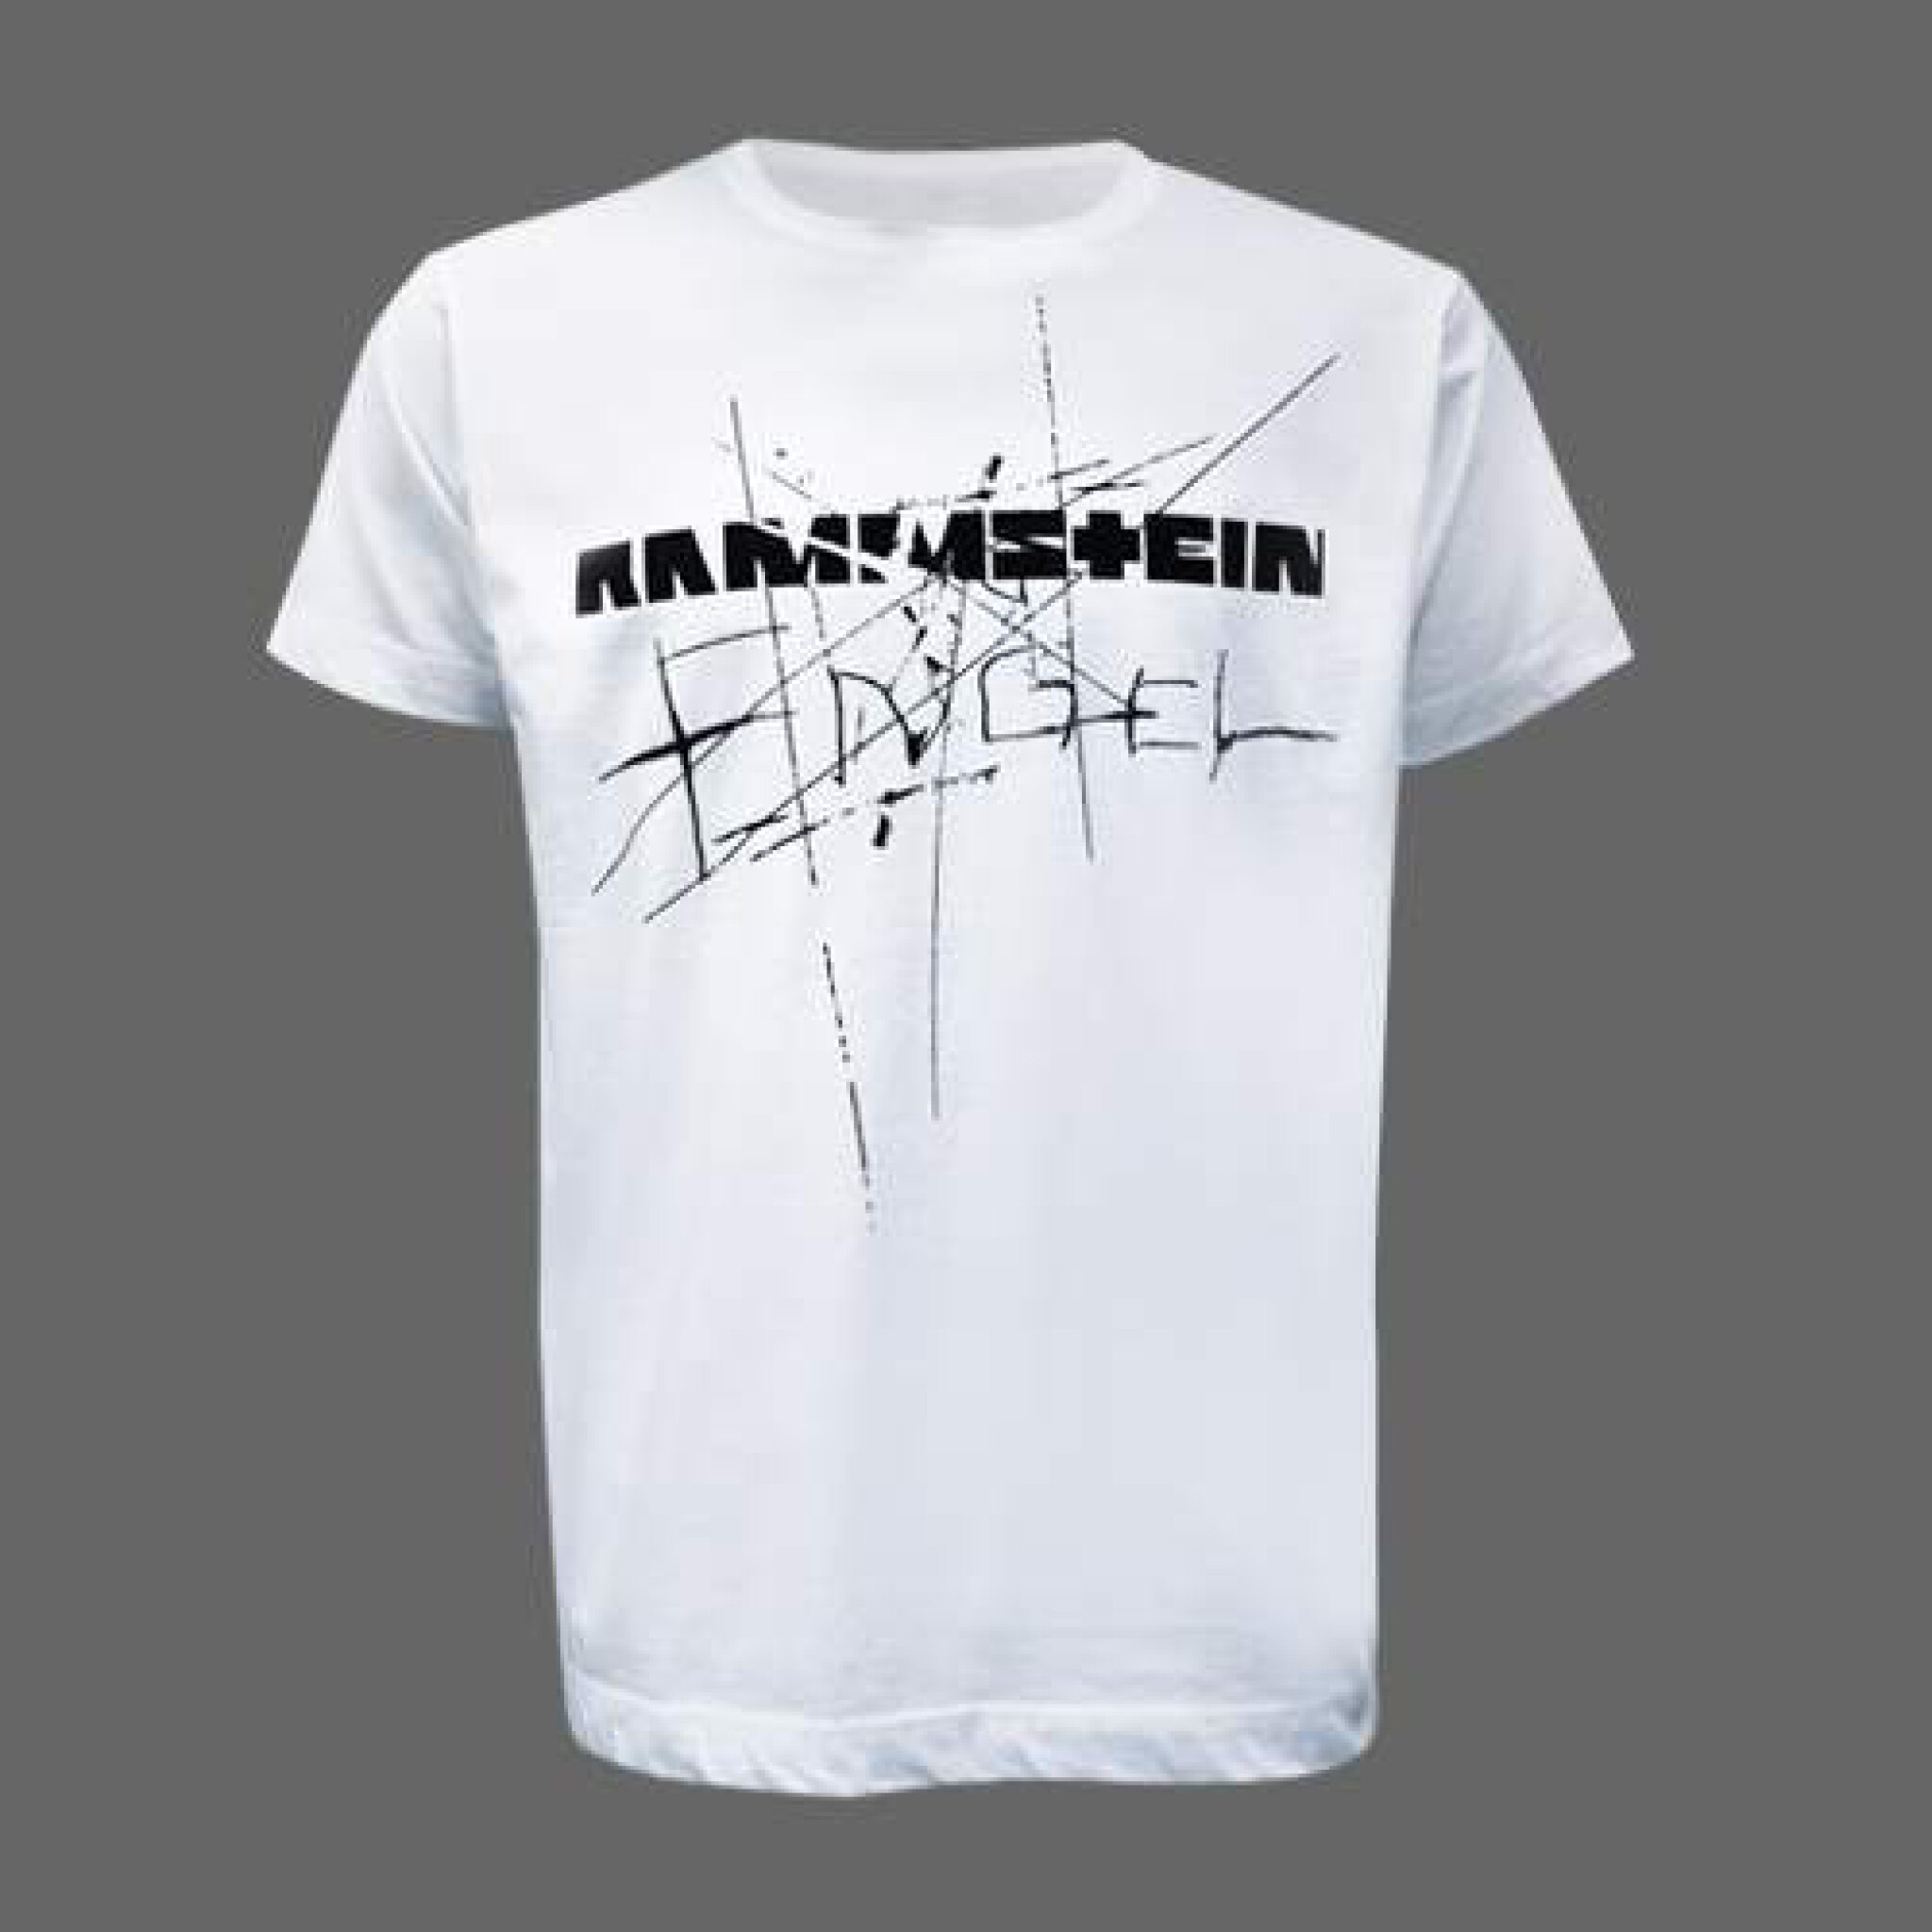 Alligevel tonehøjde TRUE T-Shirt ”ENGEL”-Lettering | Rammstein-Shop